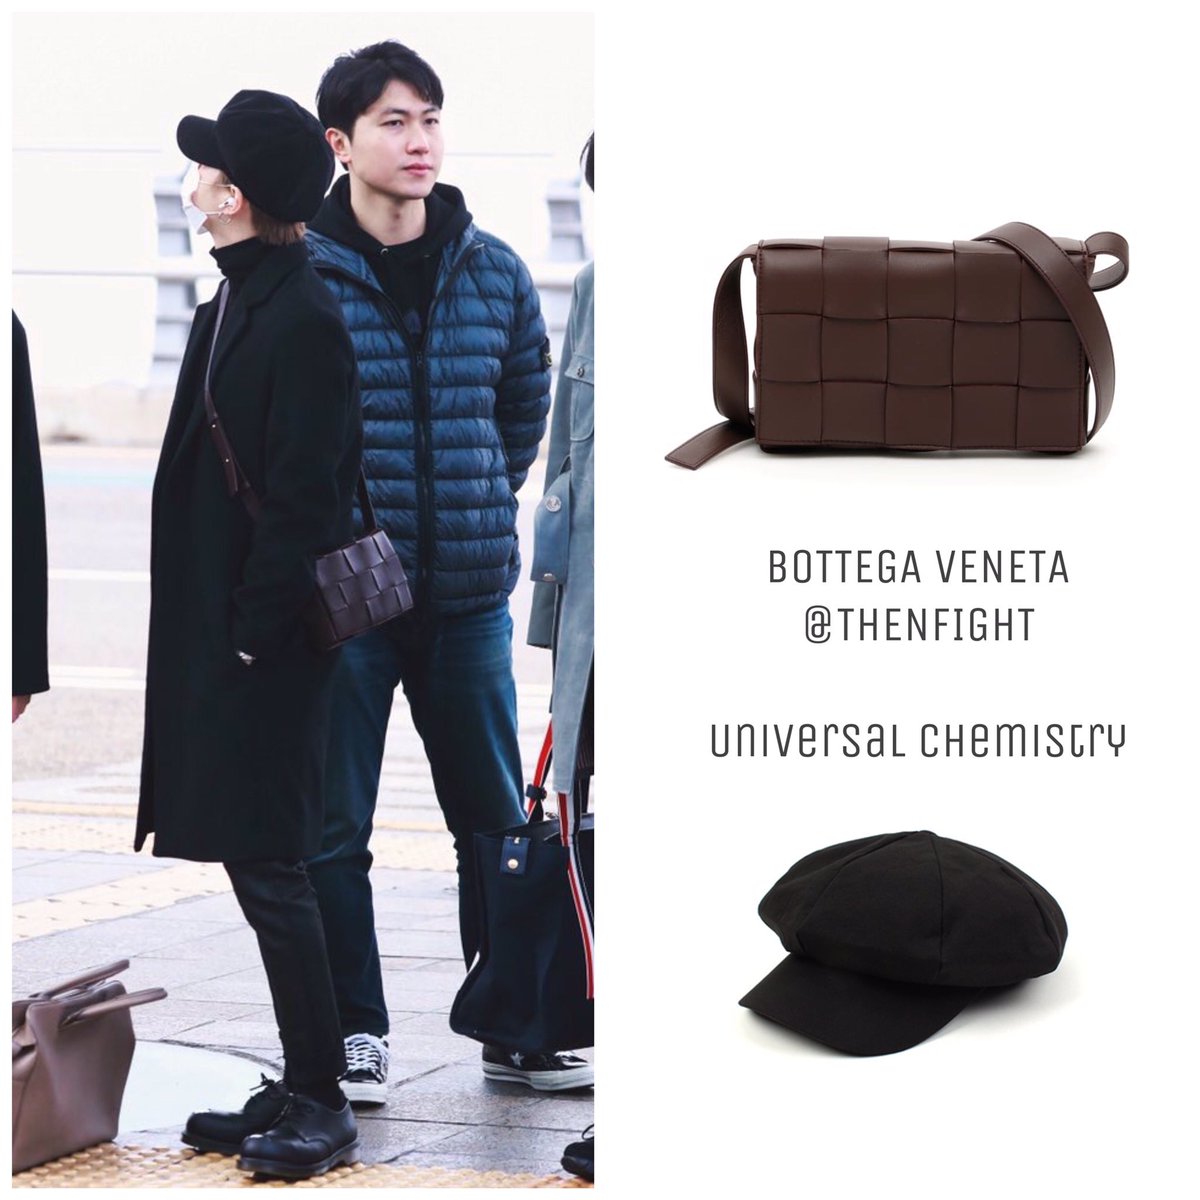 Suga BTS is carrying Bottega Veneta Cassette bag, the iconic Bottega Veneta  collection with its signature Intrecciato weaving…